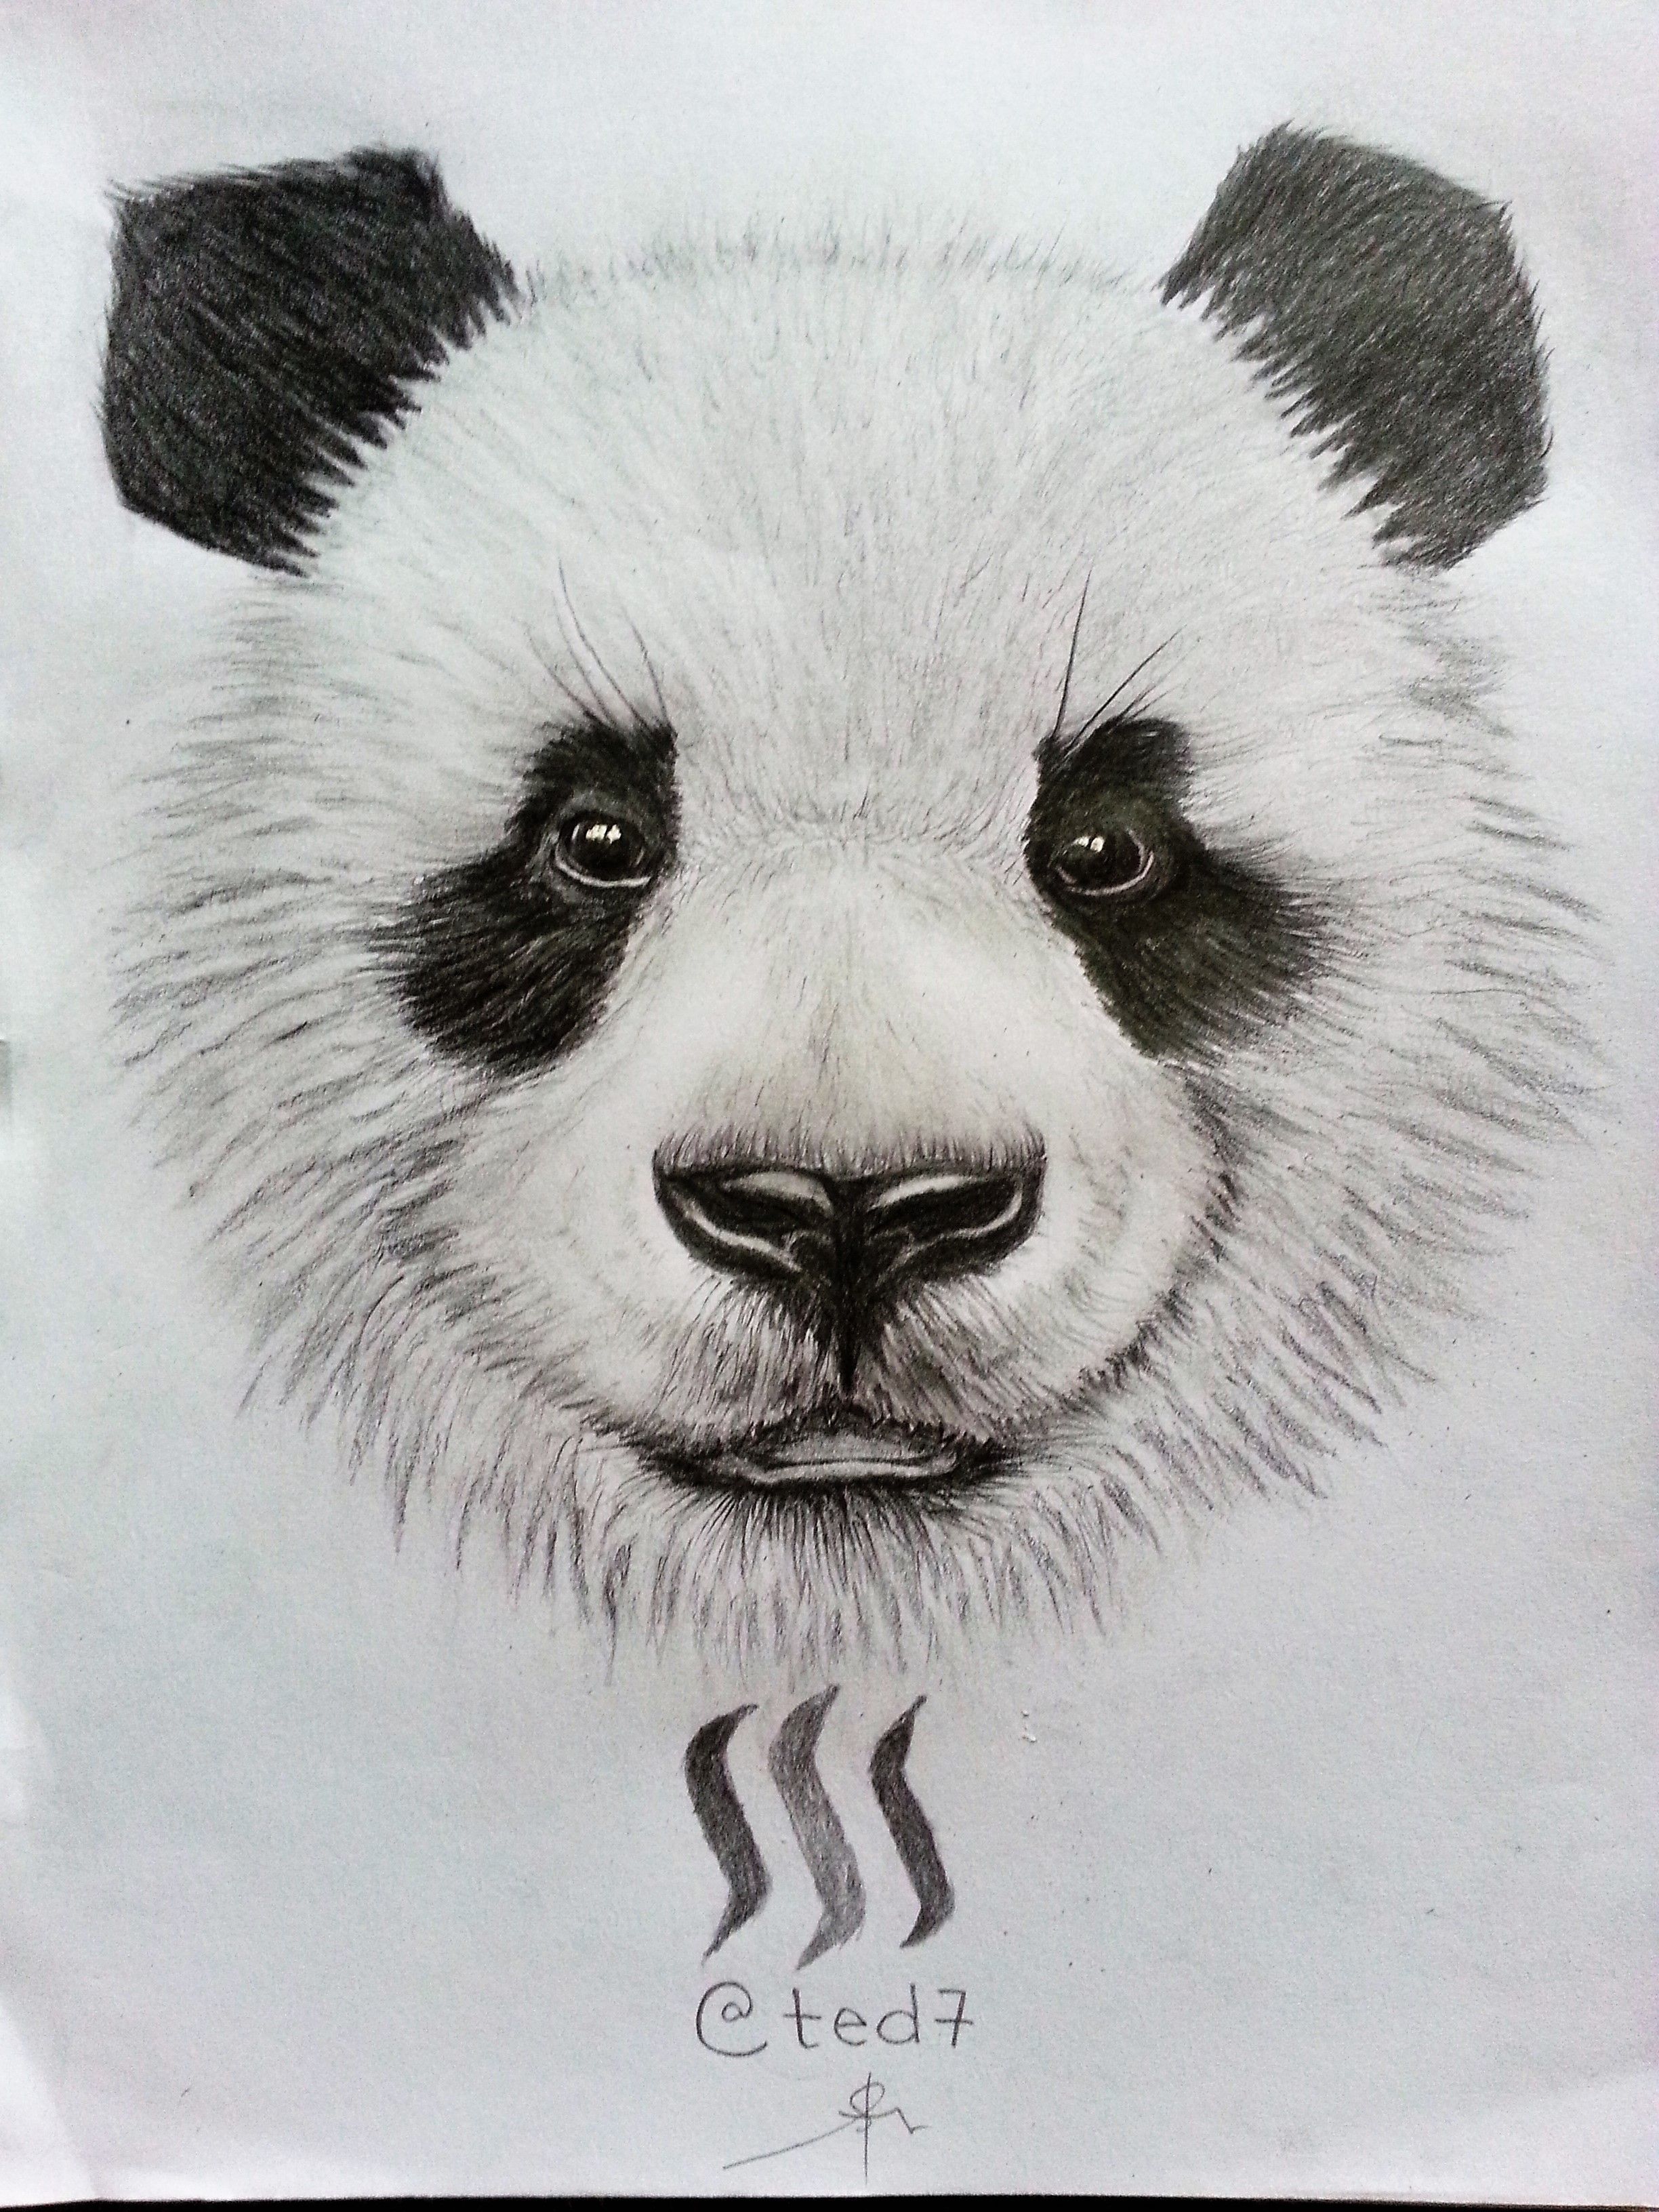 cute giant panda drawings - Clip Art Library-saigonsouth.com.vn